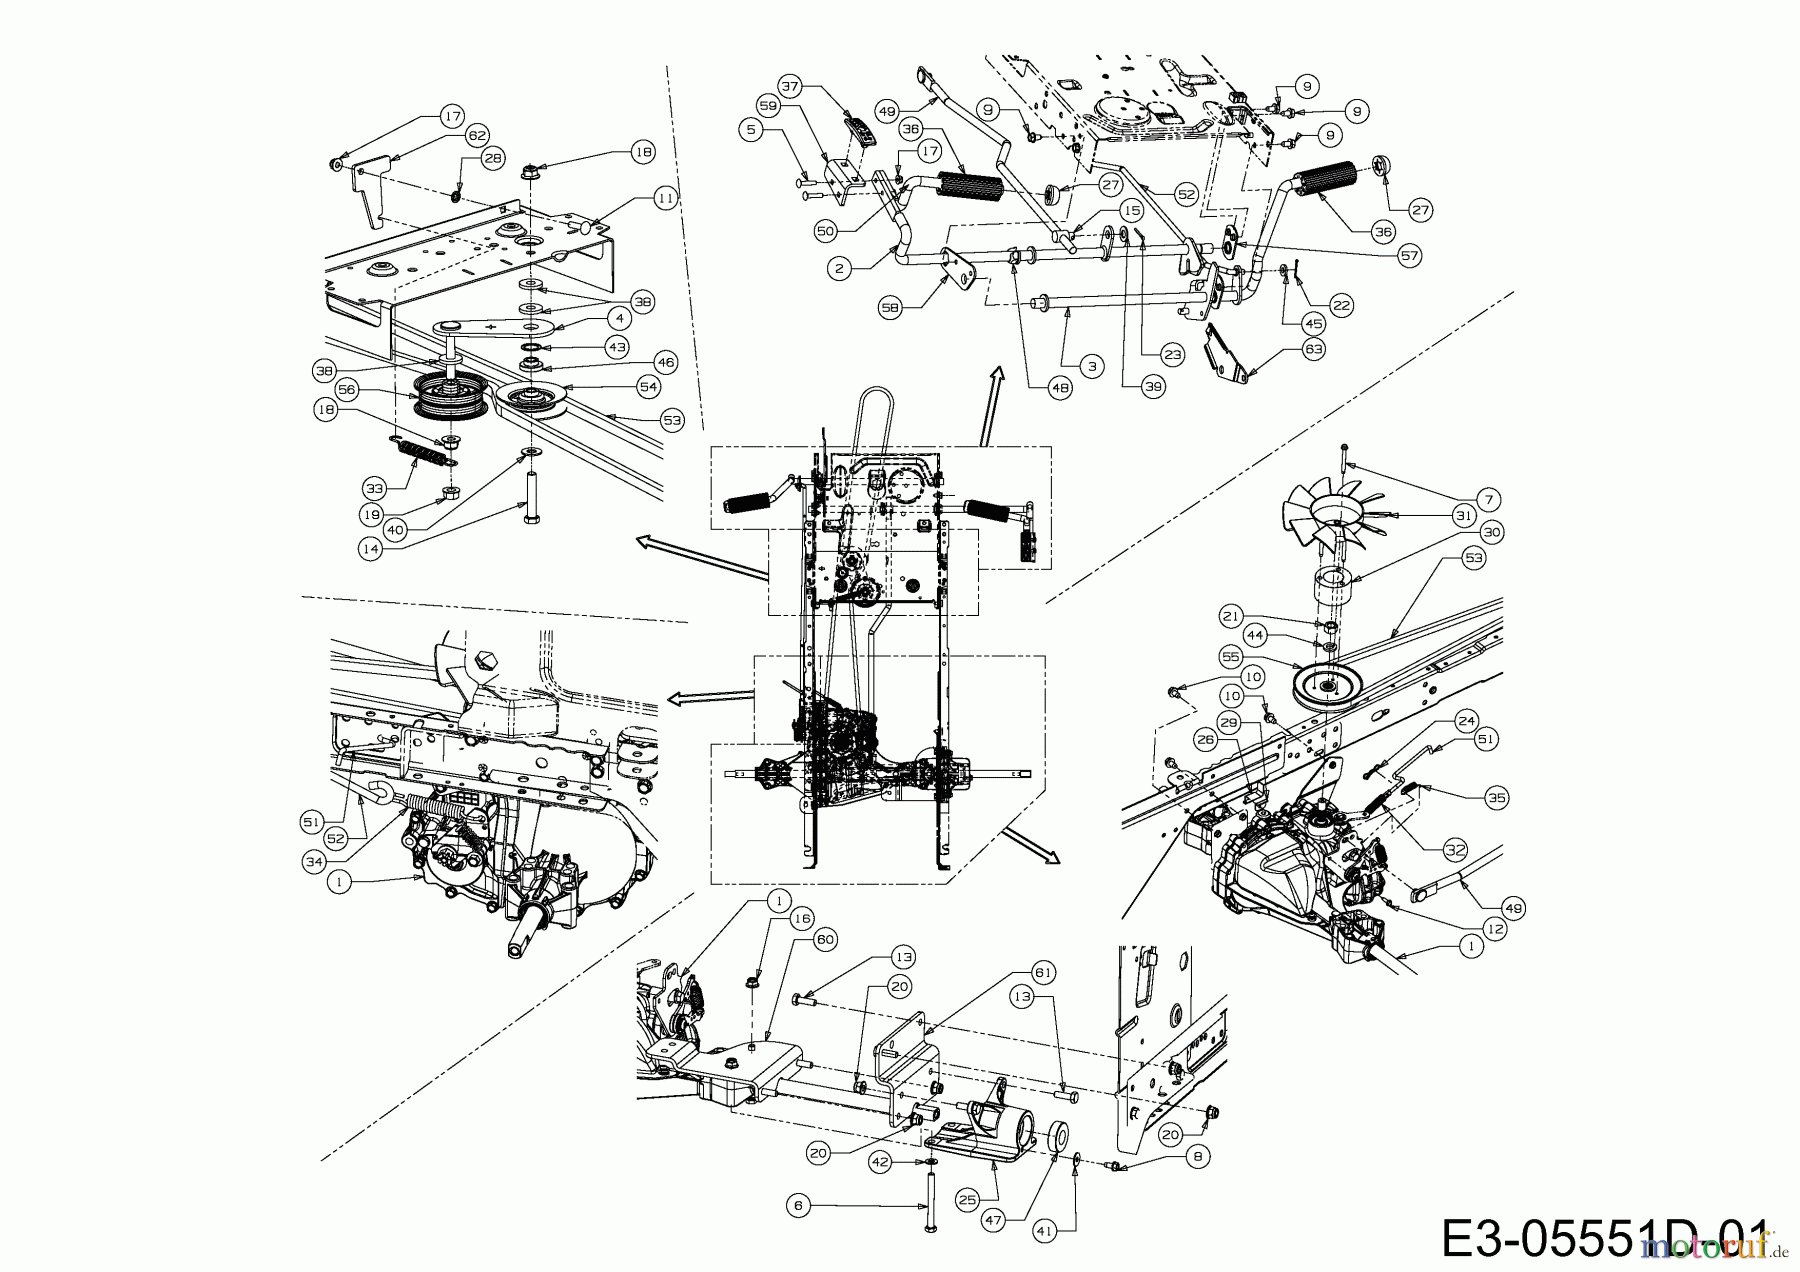  B Power Lawn tractors BT 155-92 AH 2 13HM71KE648  (2014) Drive system